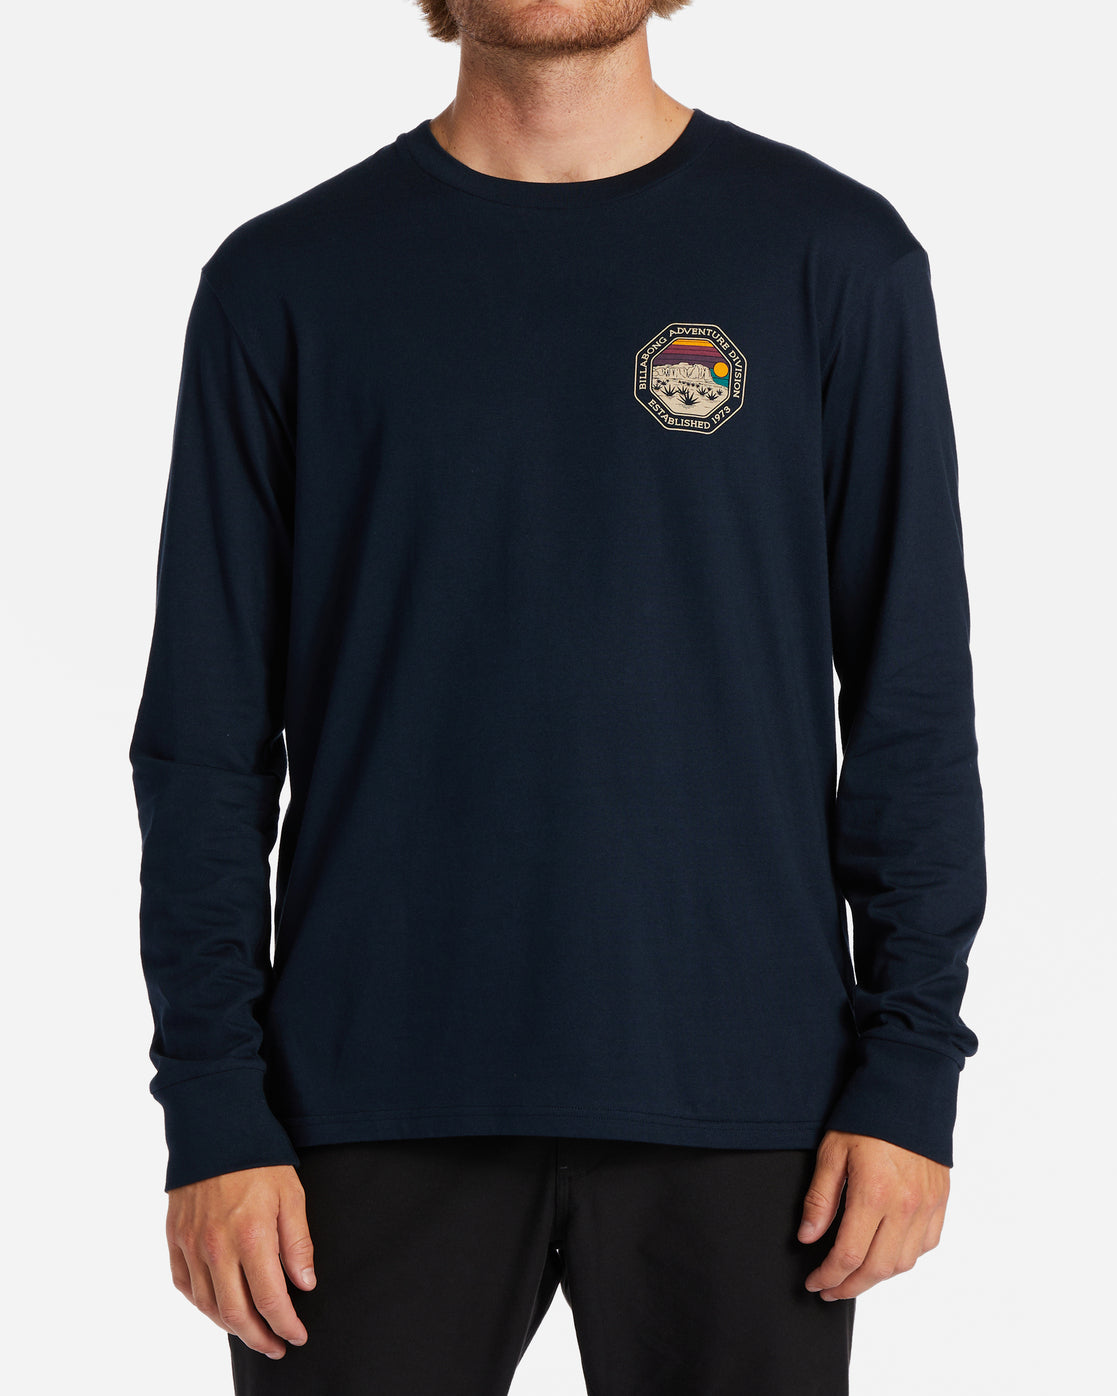 Rockies Long Sleeve T-Shirt - Navy